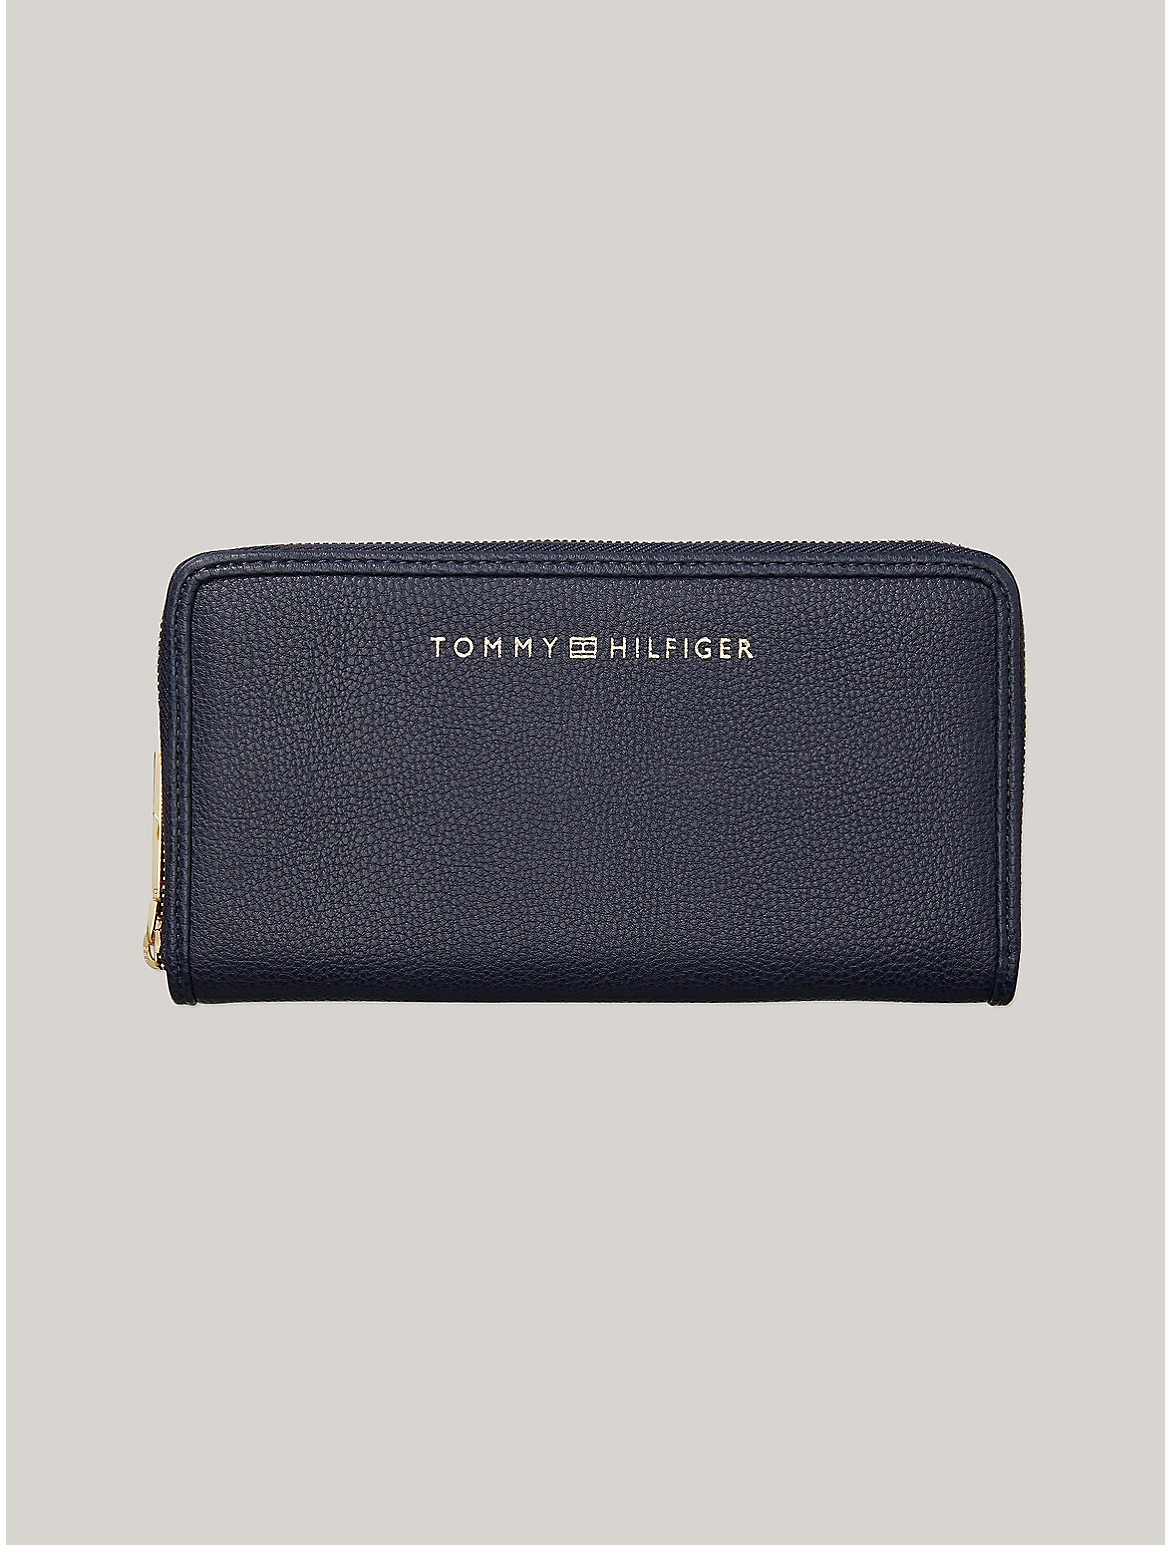 Tommy Hilfiger Women's Large Zip Wallet - Blue